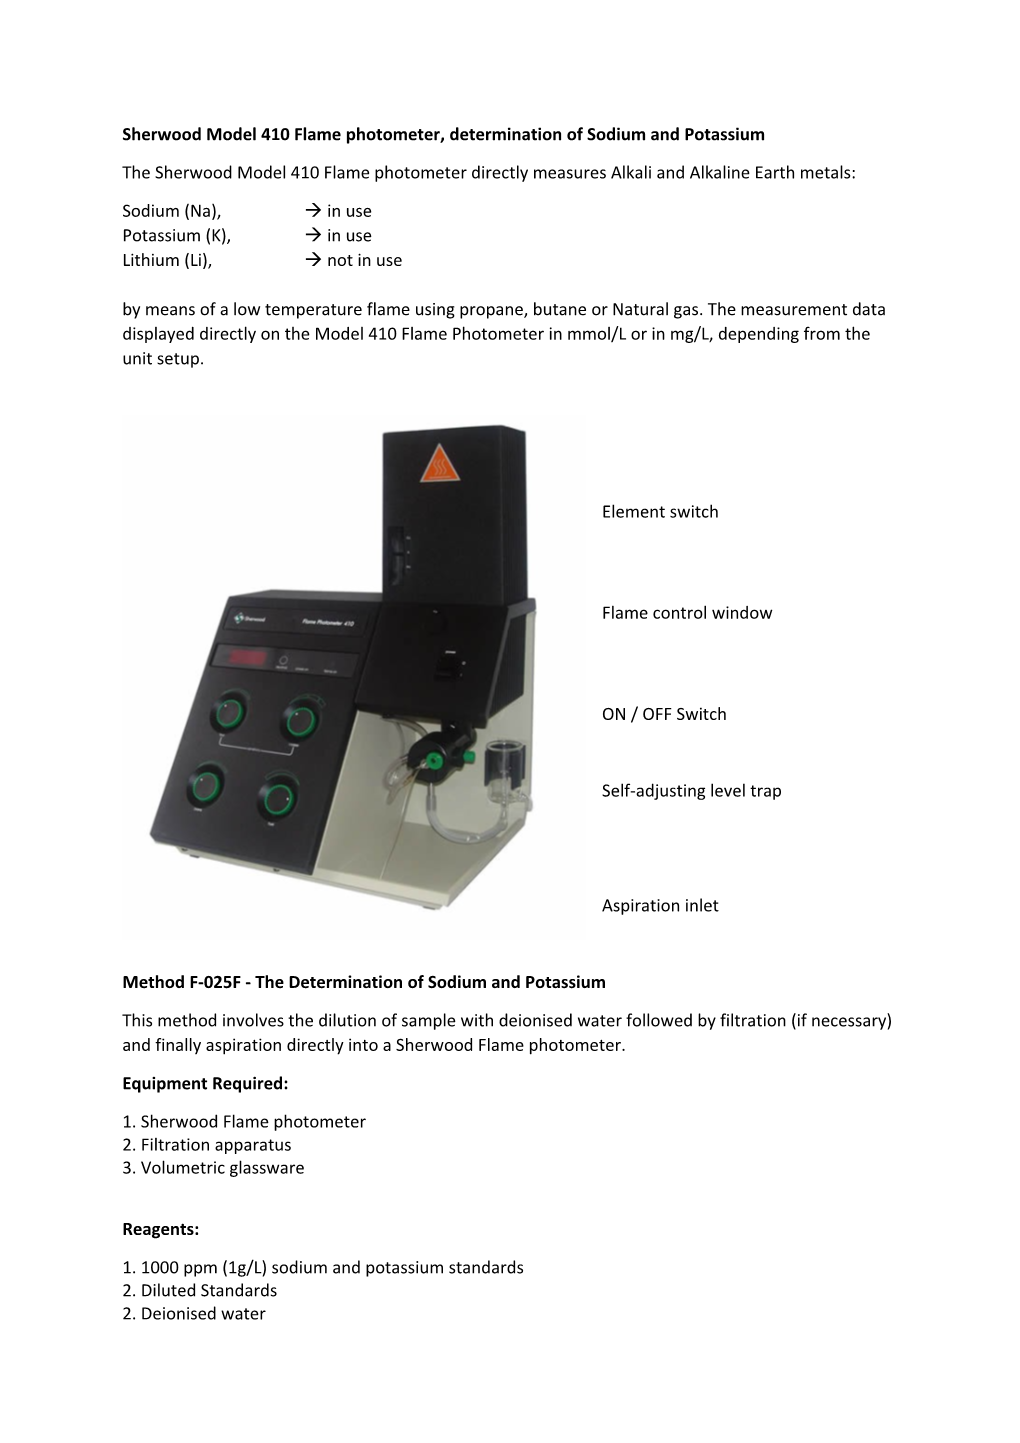 Sherwood Model 410 Flame Photometer, Determination of Sodium and Potassium